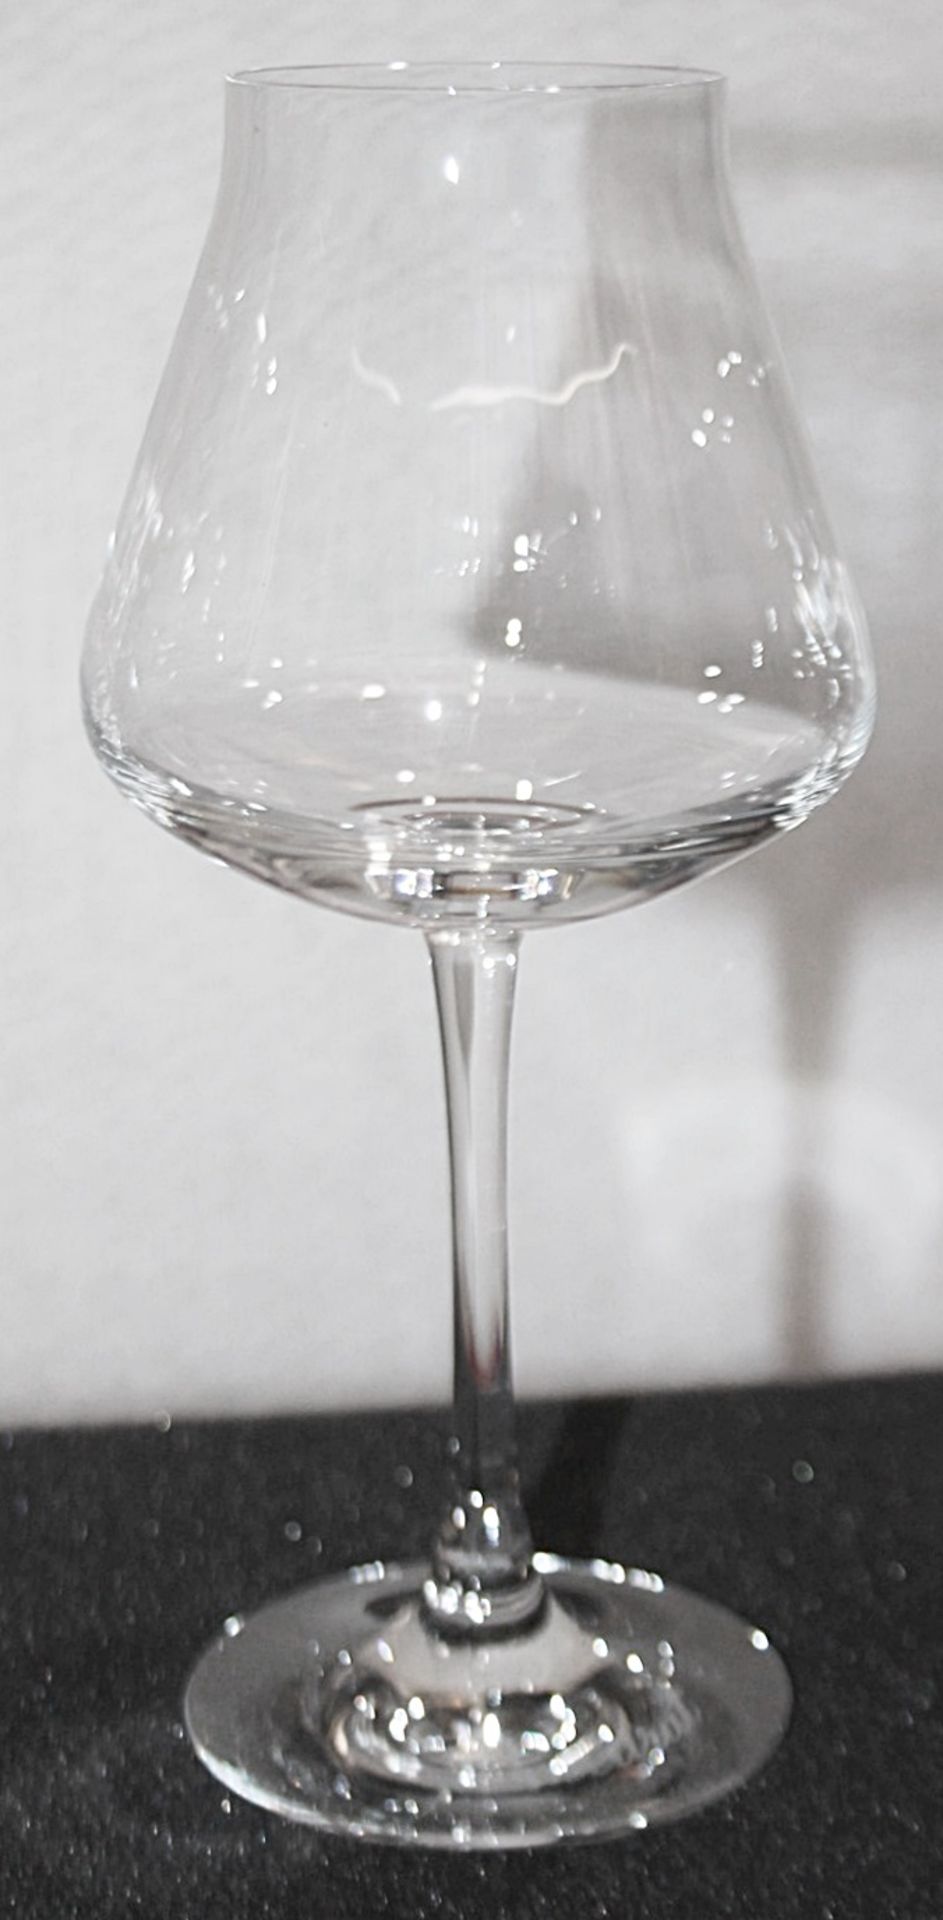 3 x Assorted BACCARAT 'Chateau Baccarat' Degustation Crystal Glasses - Original Total Value £180. - Image 7 of 7